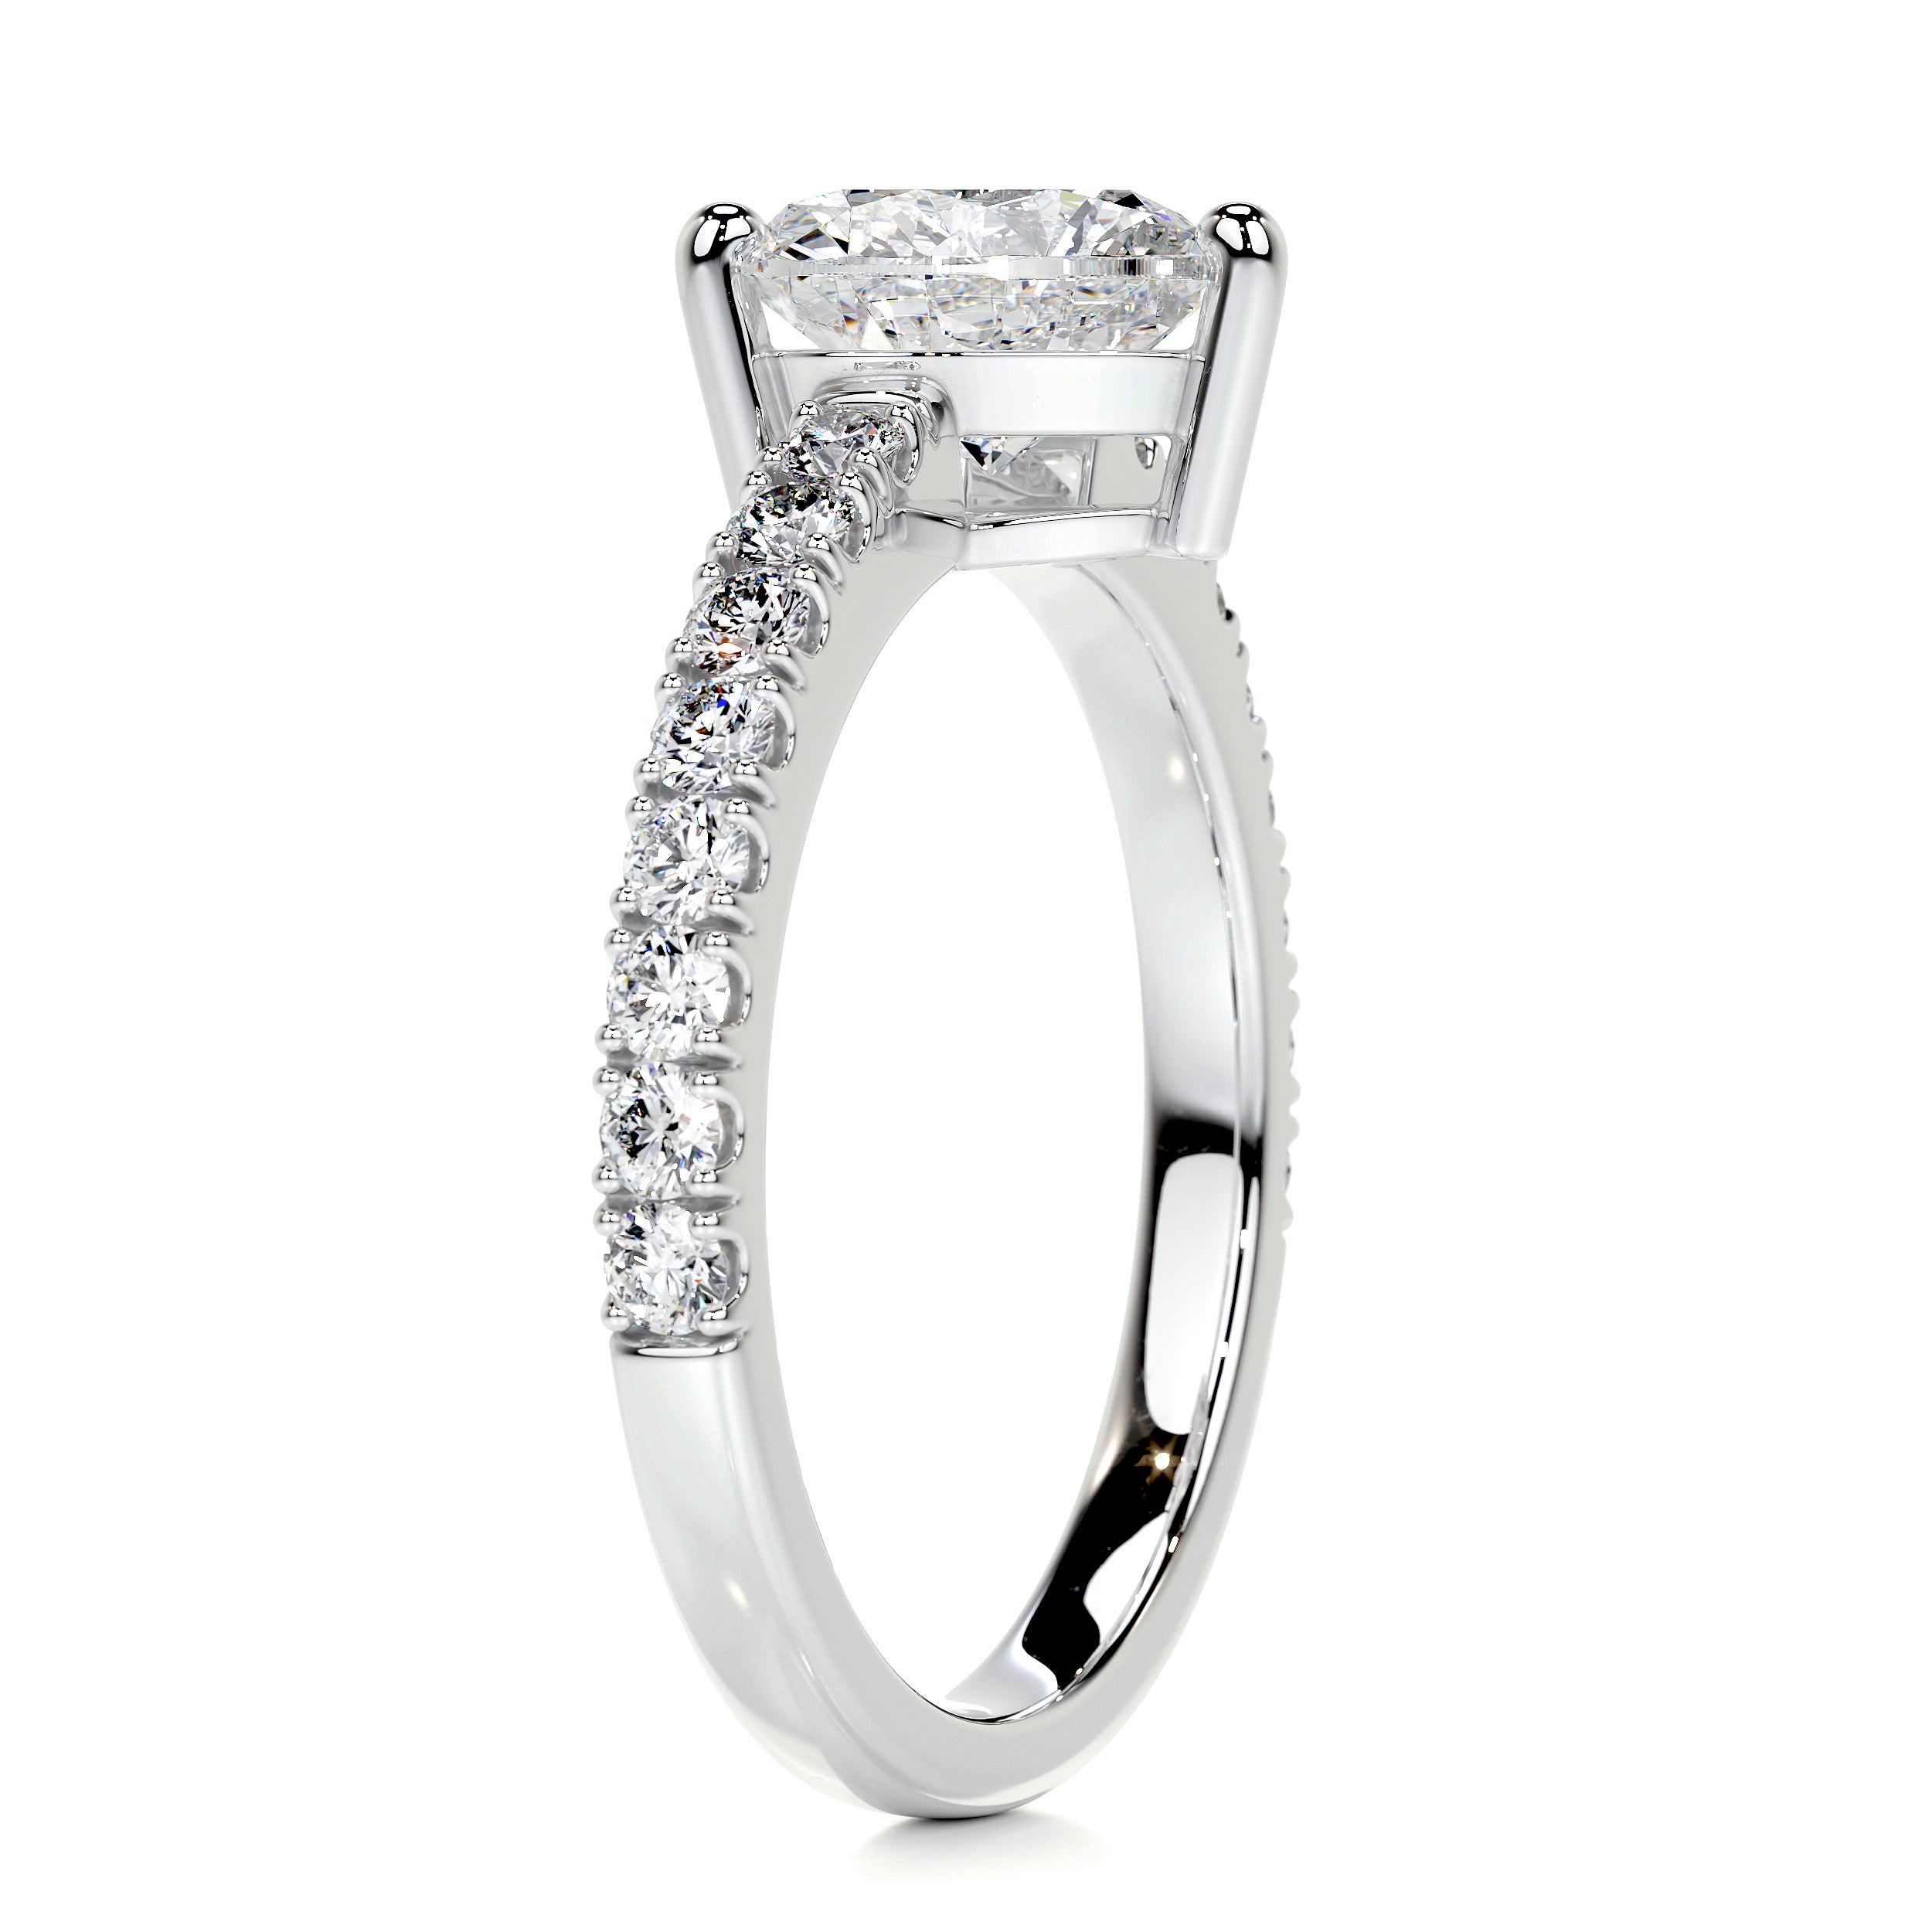 Audrey Diamond Engagement Ring   (1.3 Carat) -Platinum